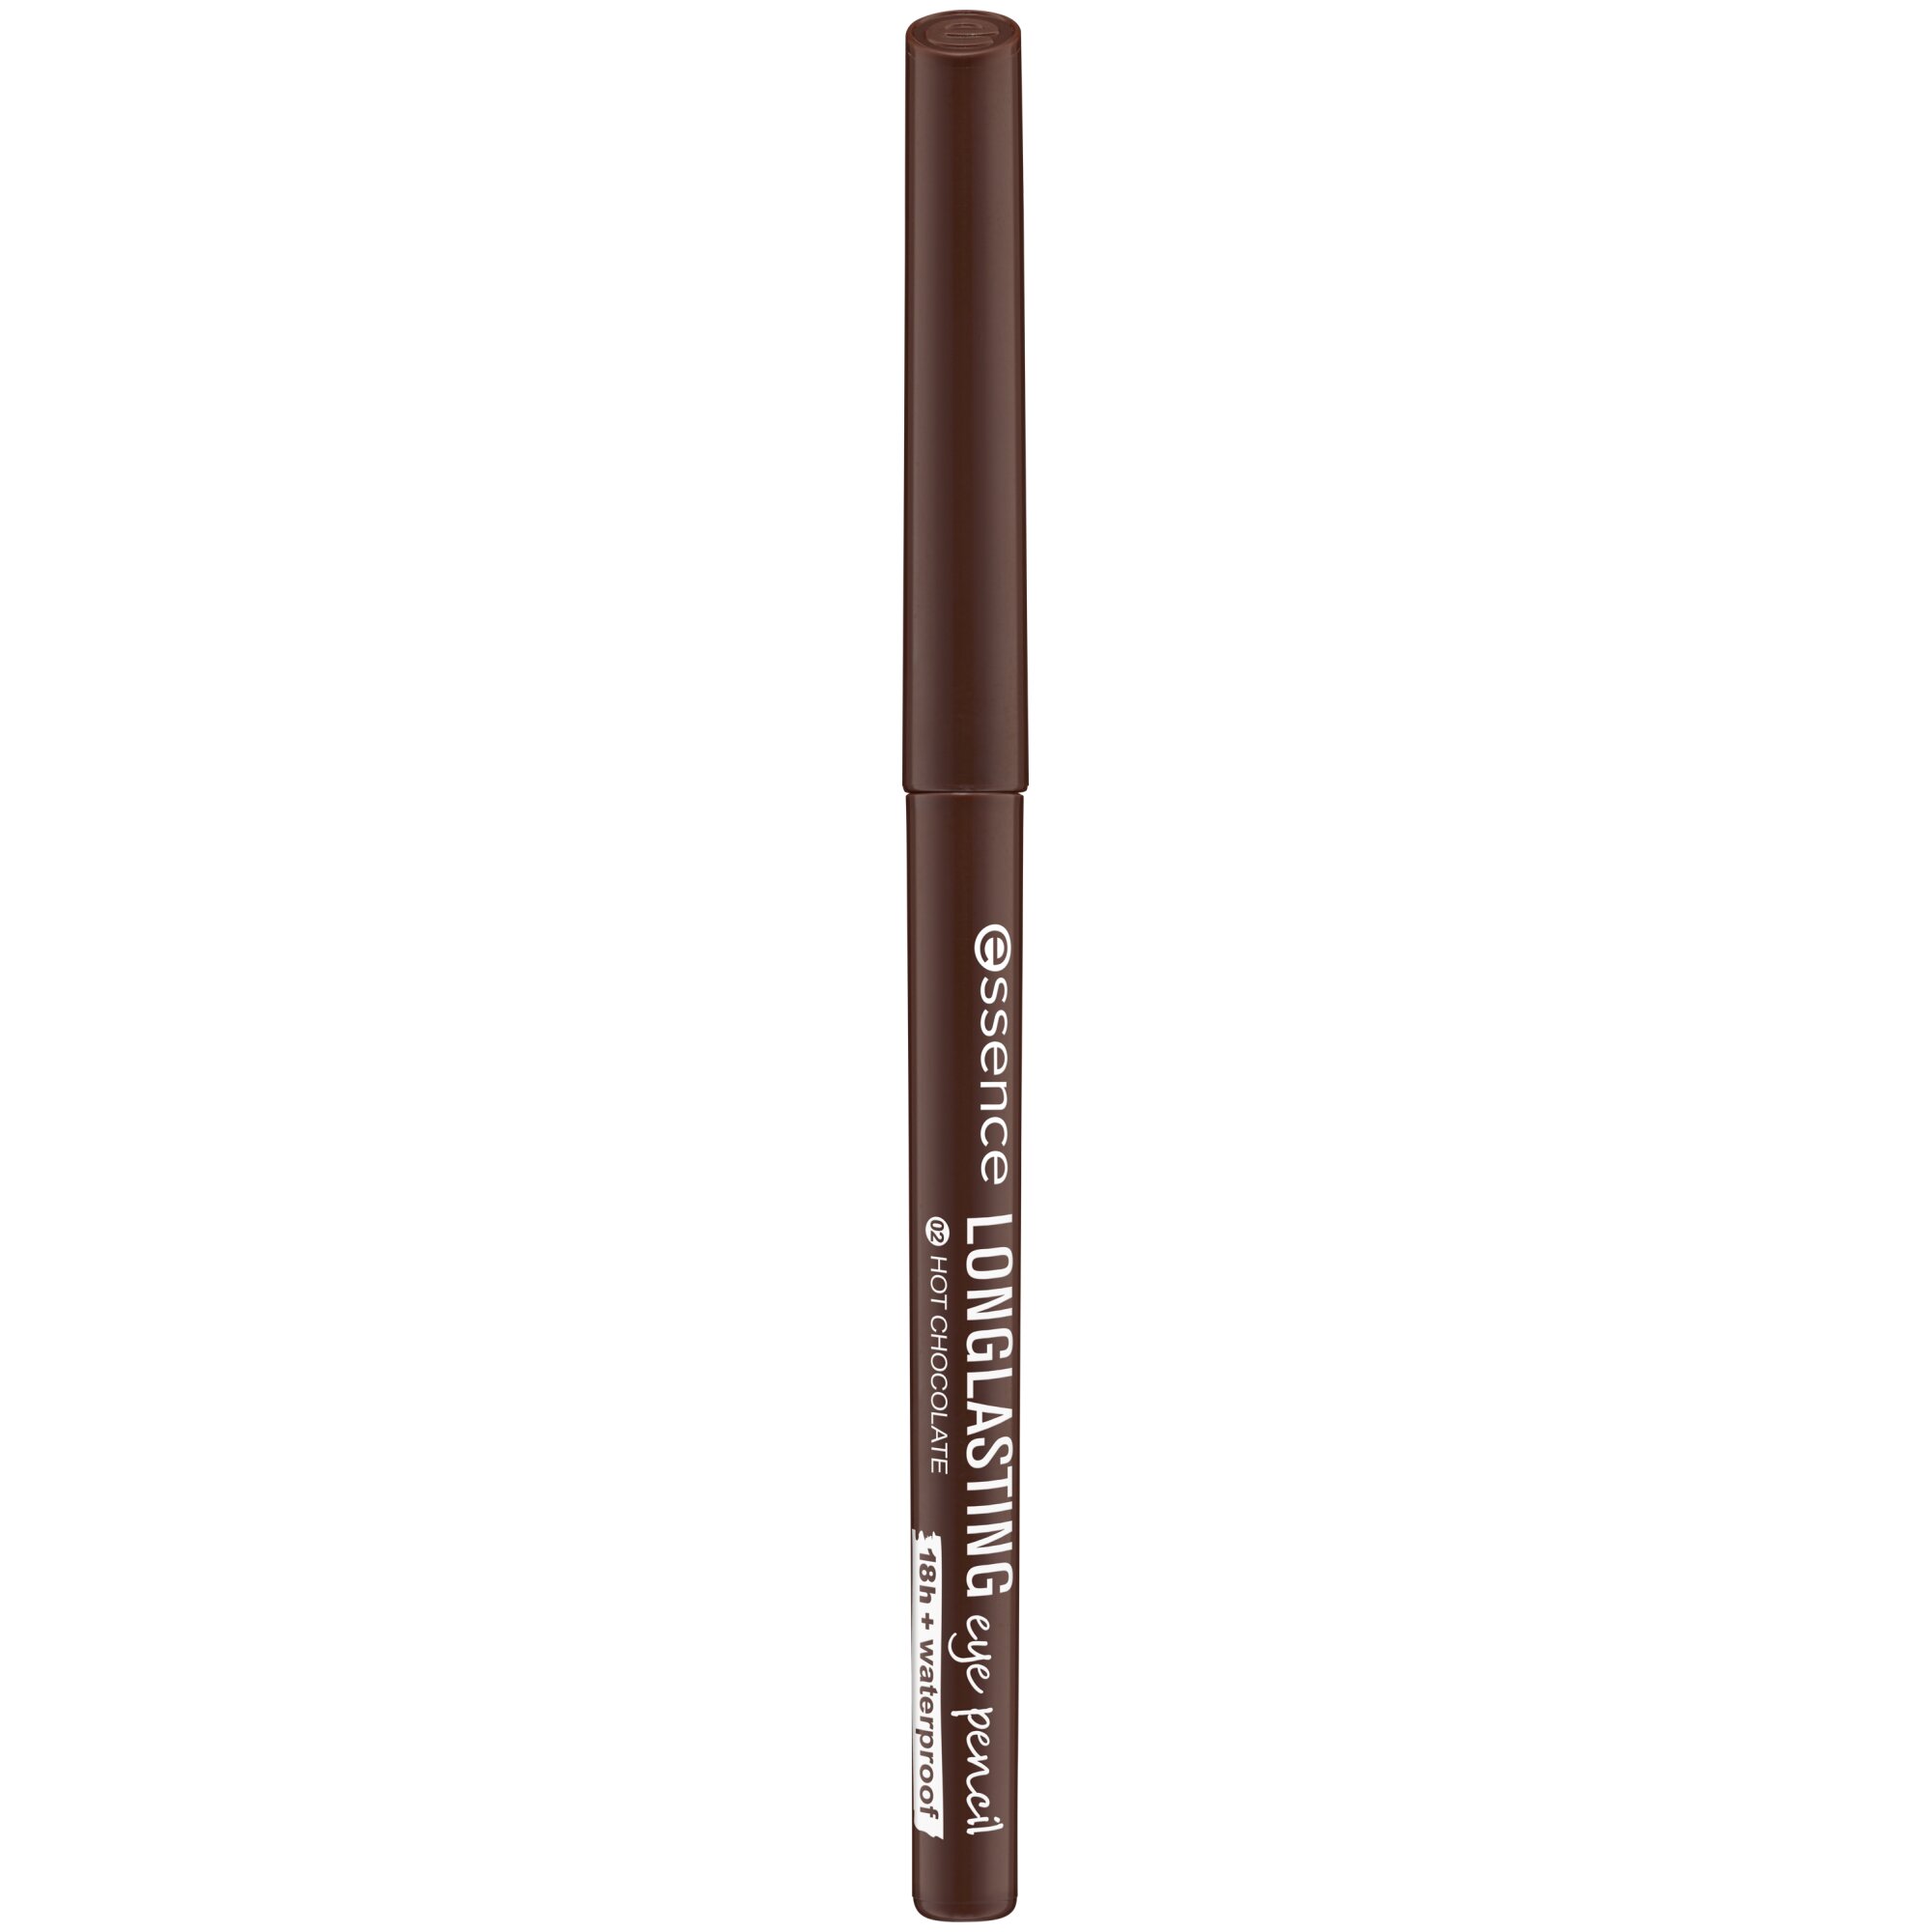 Creion pentru ochi Long-Lasting, 02 - Hot Chocolate, 0.28 g, Essence